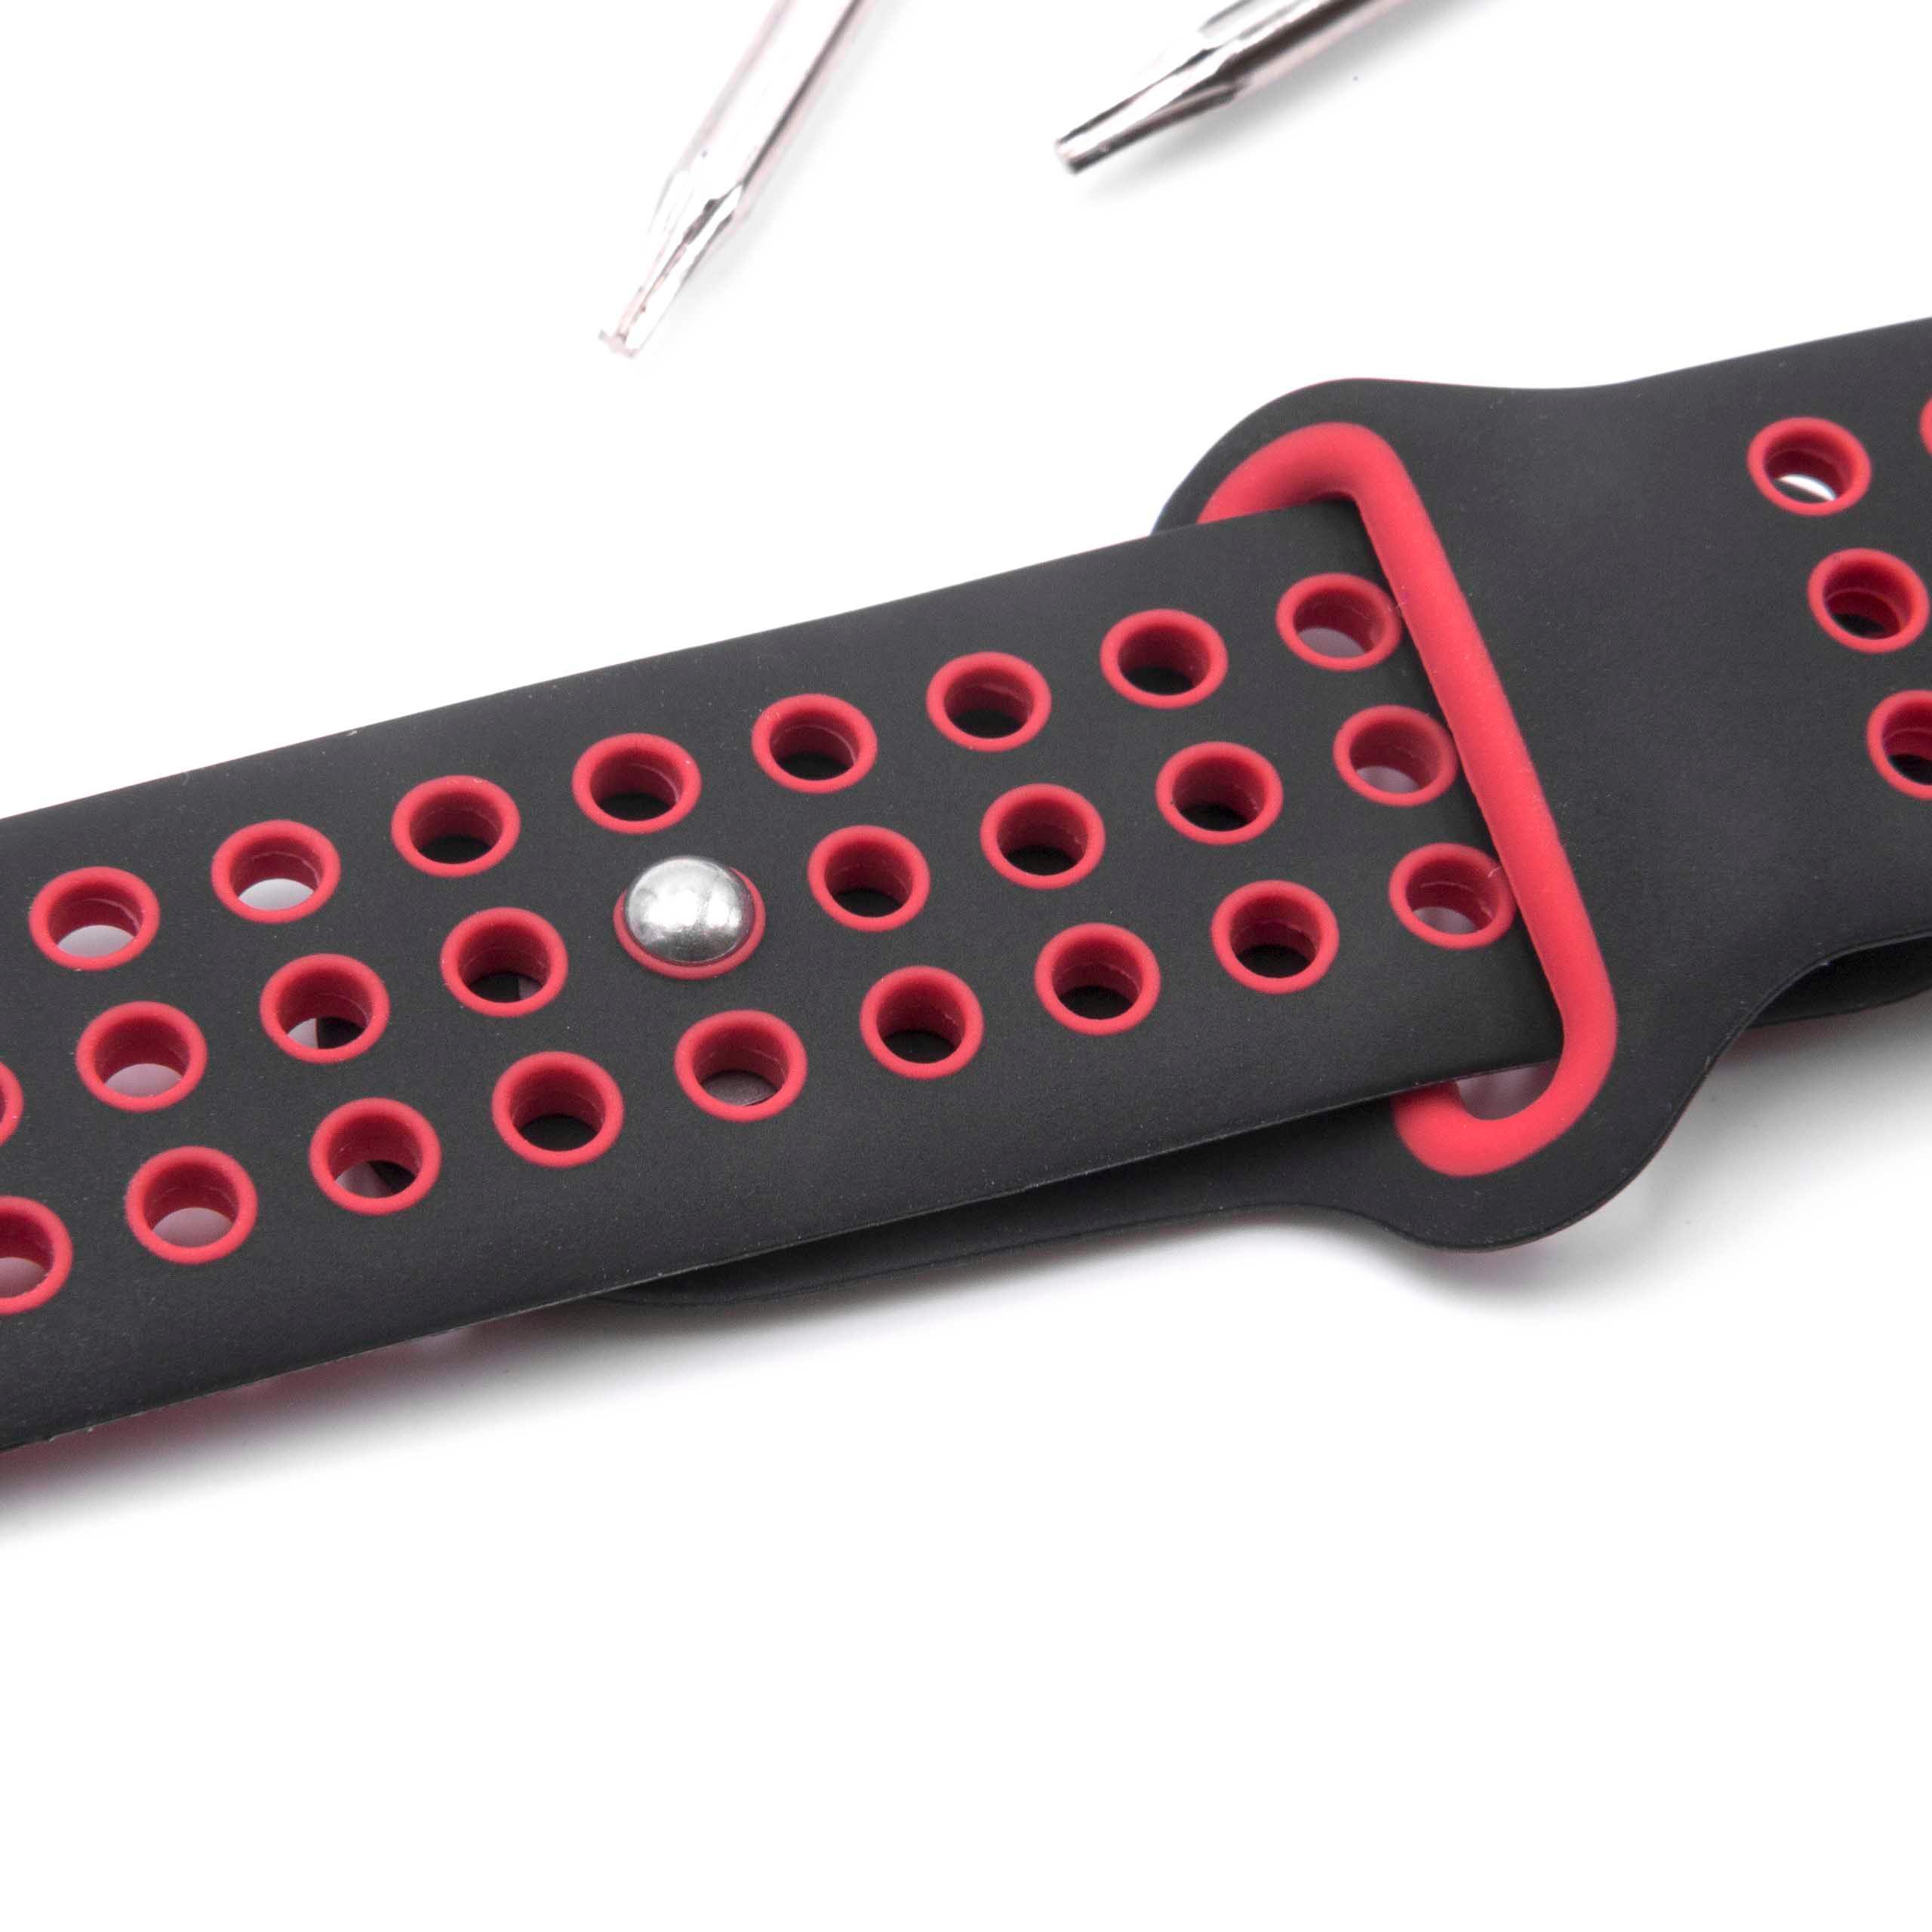 Armband für Garmin Forerunner / Approach Smartwatch - 12 cm lang, 22mm breit, Silikon, schwarz, rot